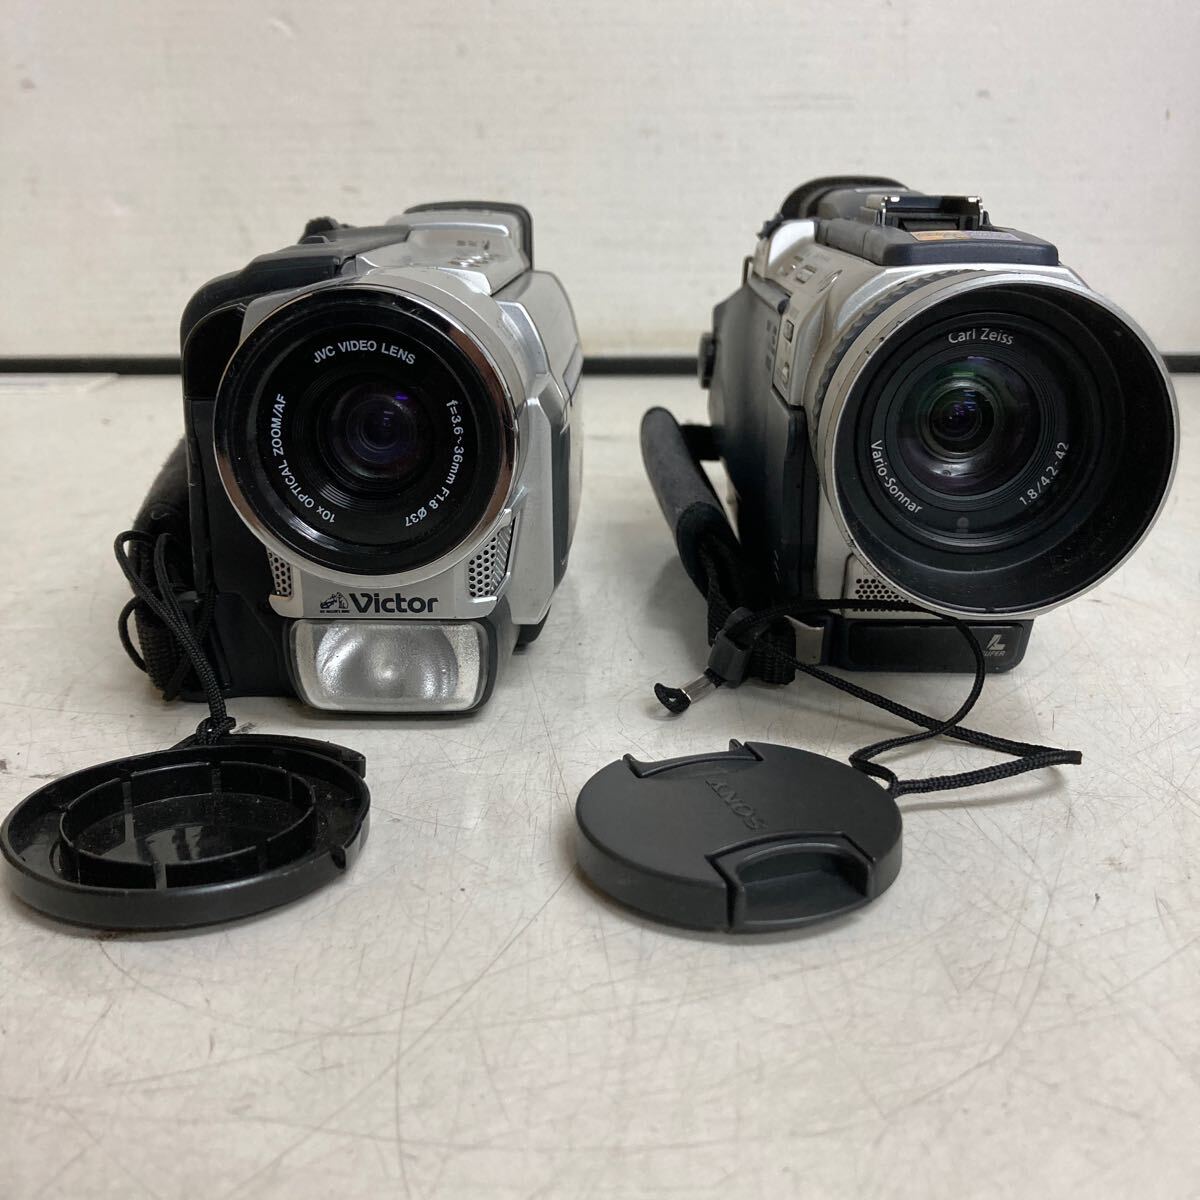 L002 ビデオカメラ9台/8mmカメラ 1台/ 合わせて10台まとめて/SONY Victor FUJICAなど 動作未確認 ジャンク品の画像6